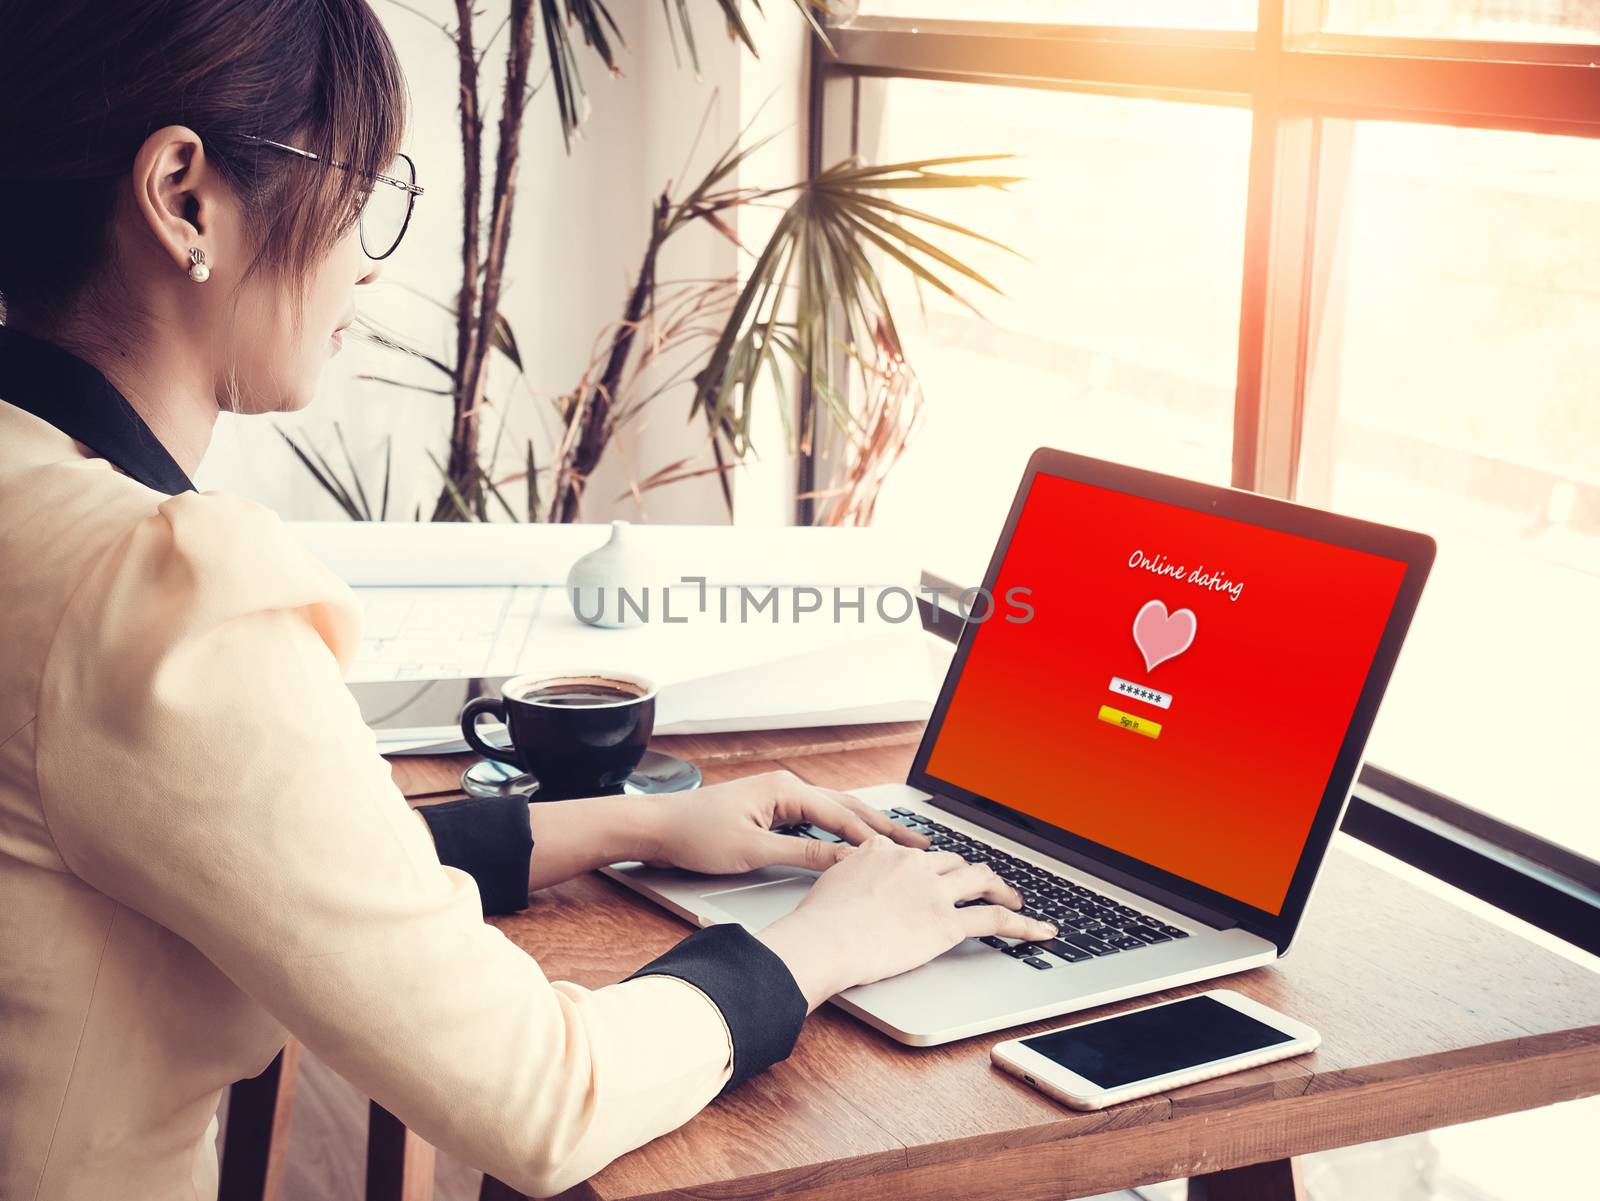 online love concept: office girl using online dating website on a laptop display, hardwood desktop and stationery on background